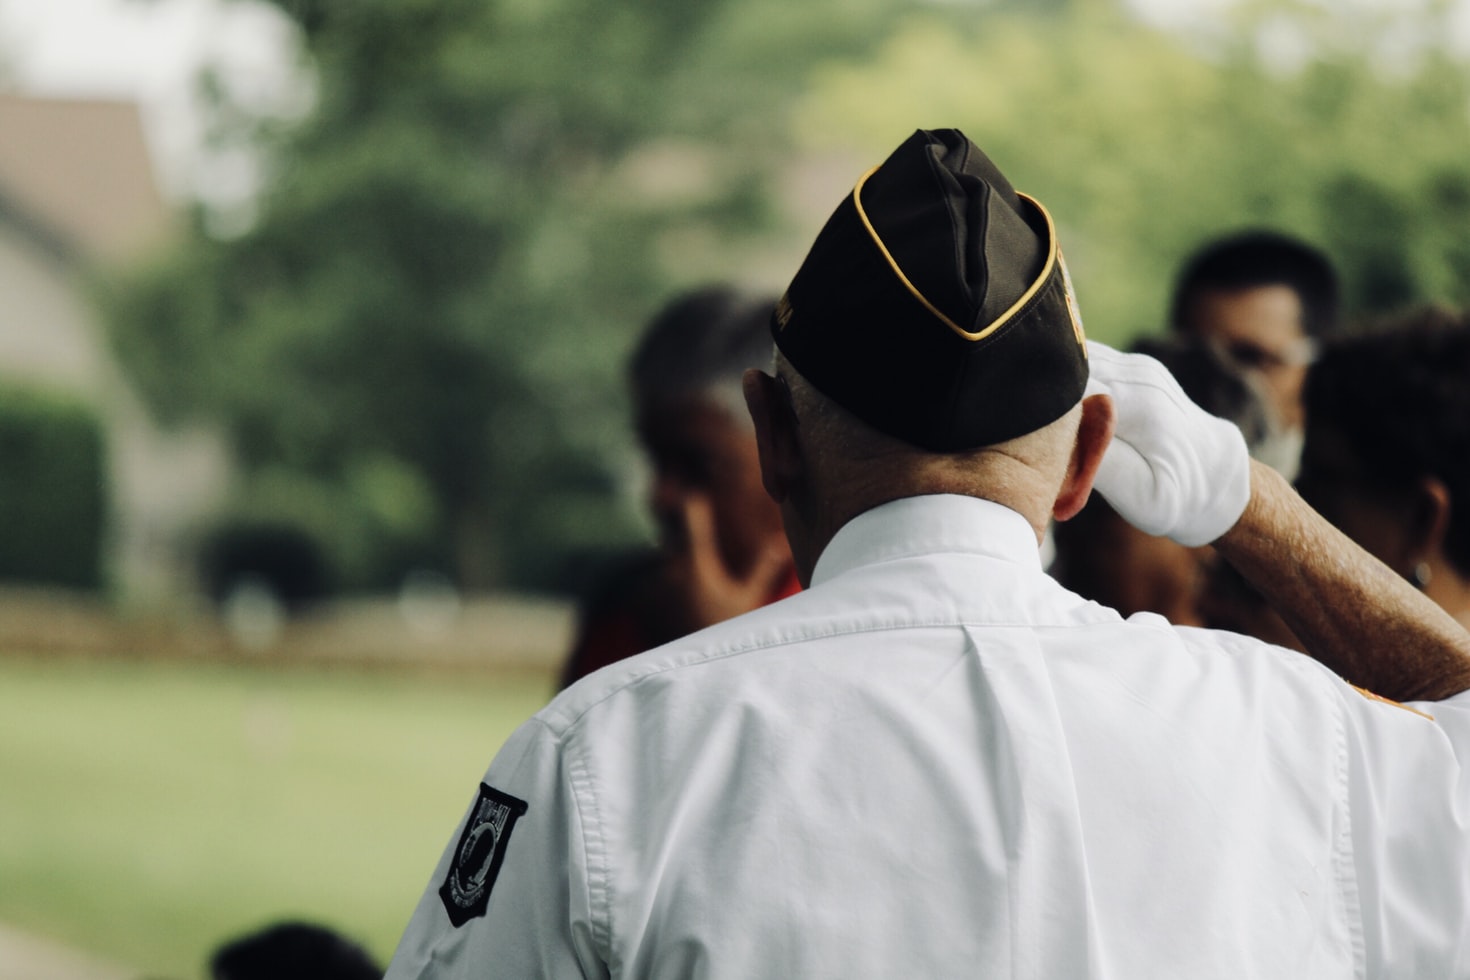 A veteran in uniform saluting